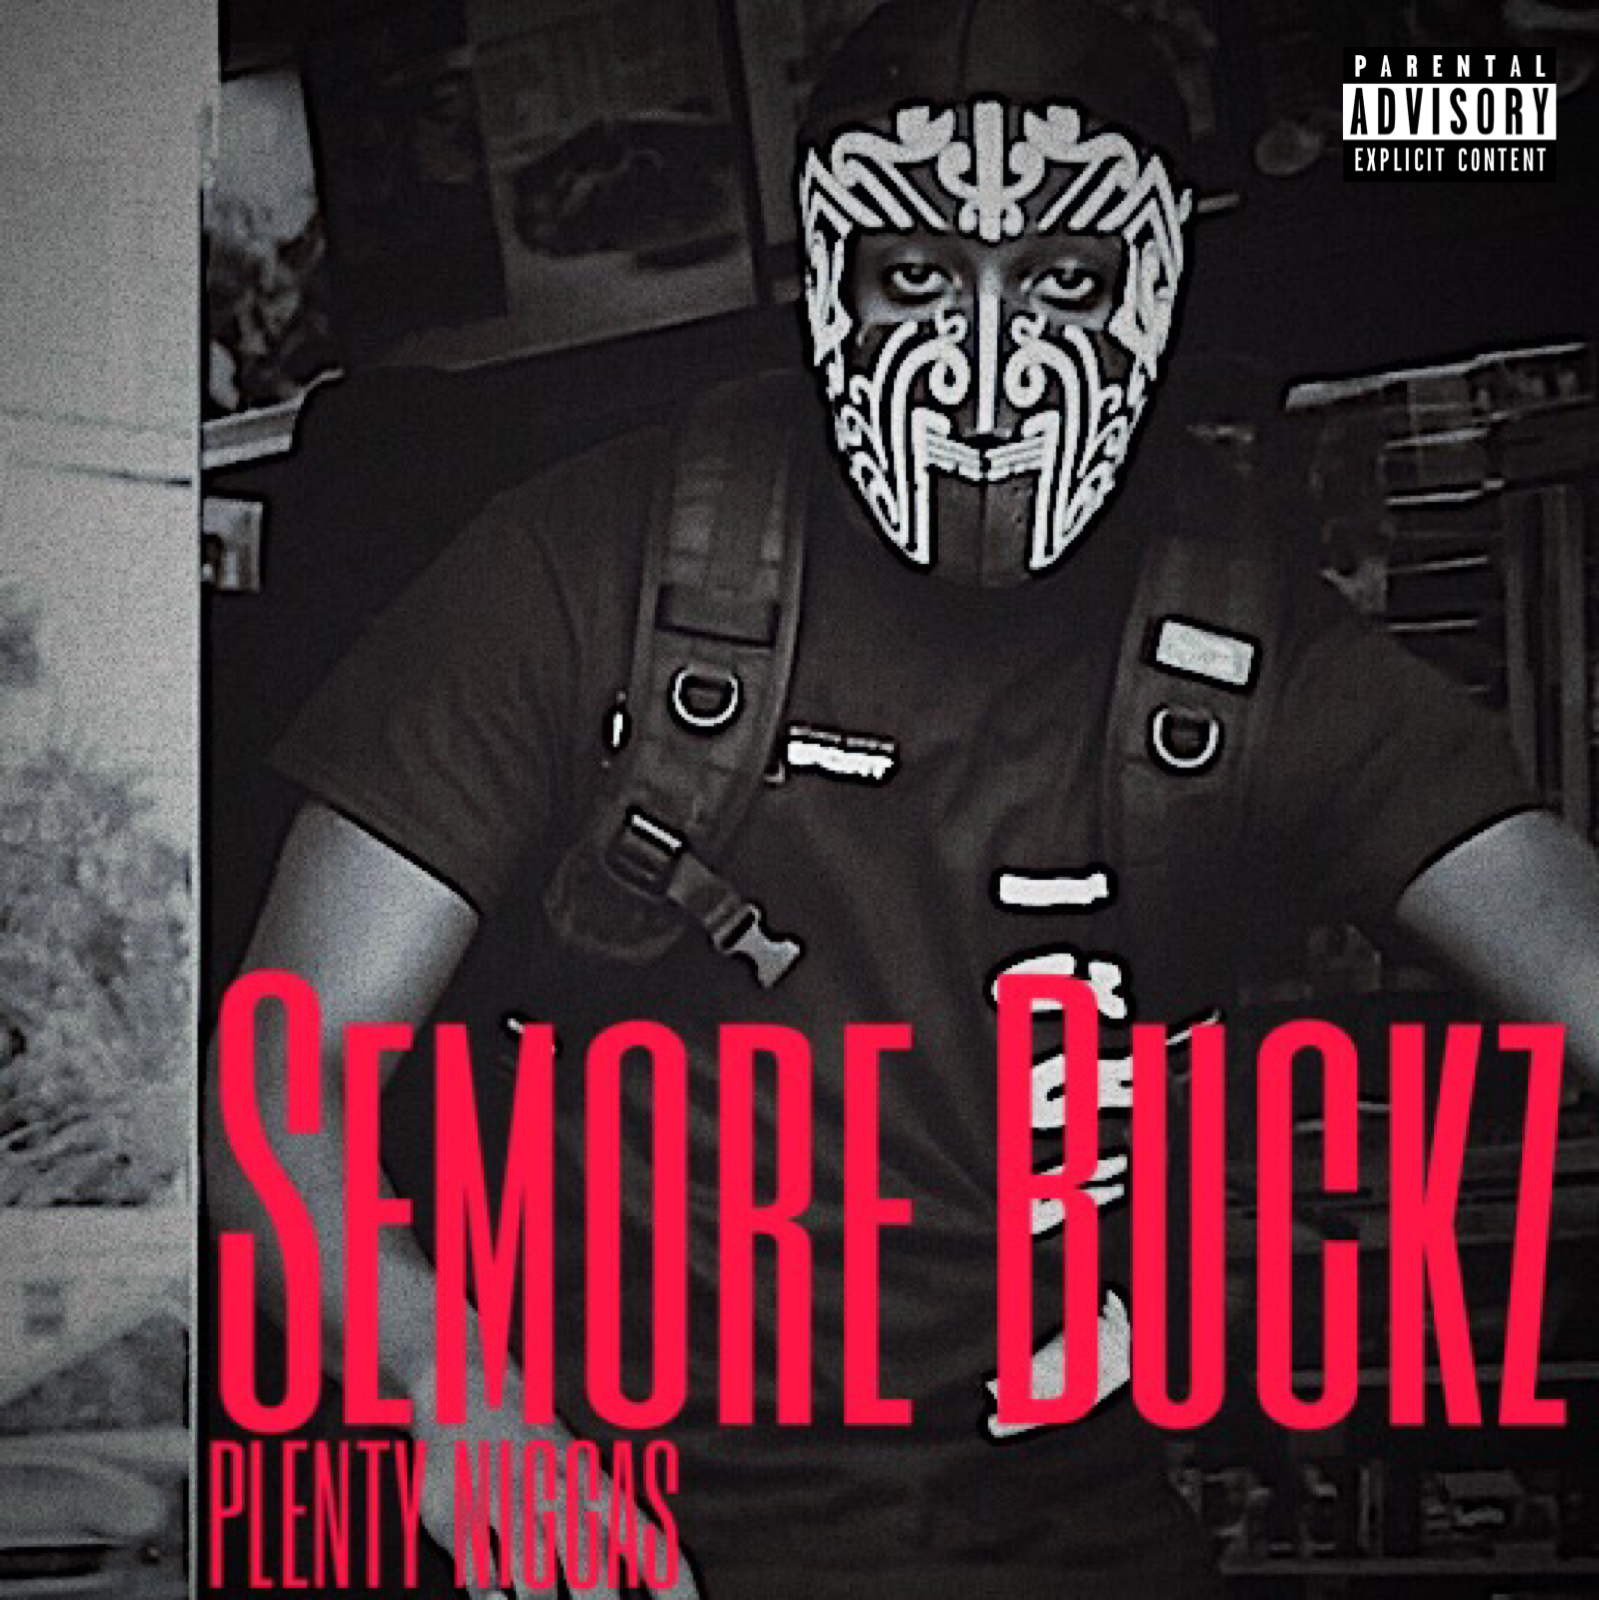 New Music: Semore Buckz – Plenty N*ggas (@semorebuckz_)